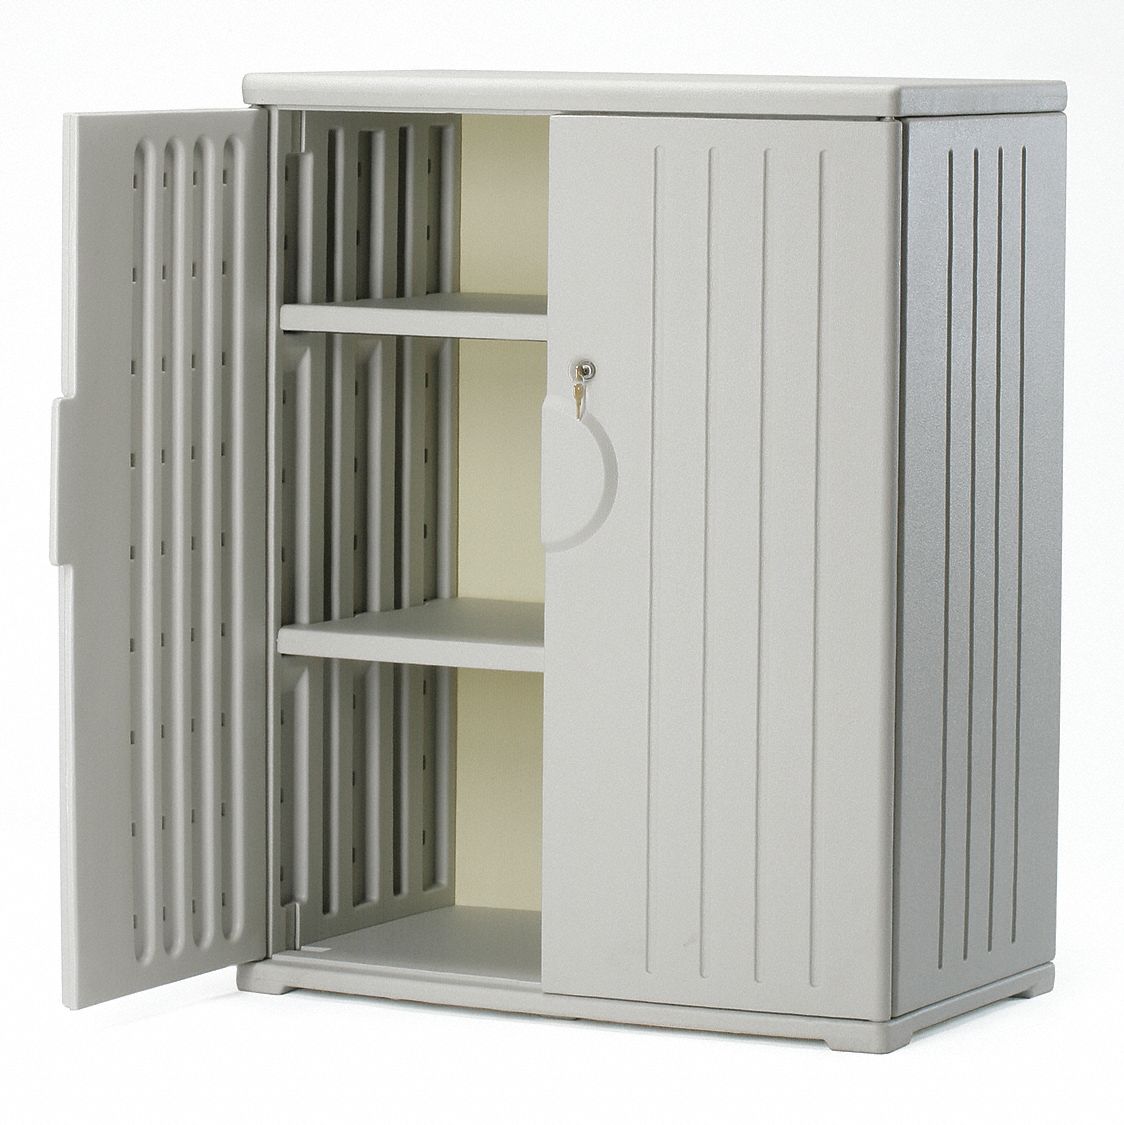 ABILITY ONE Storage Cabinet, 22